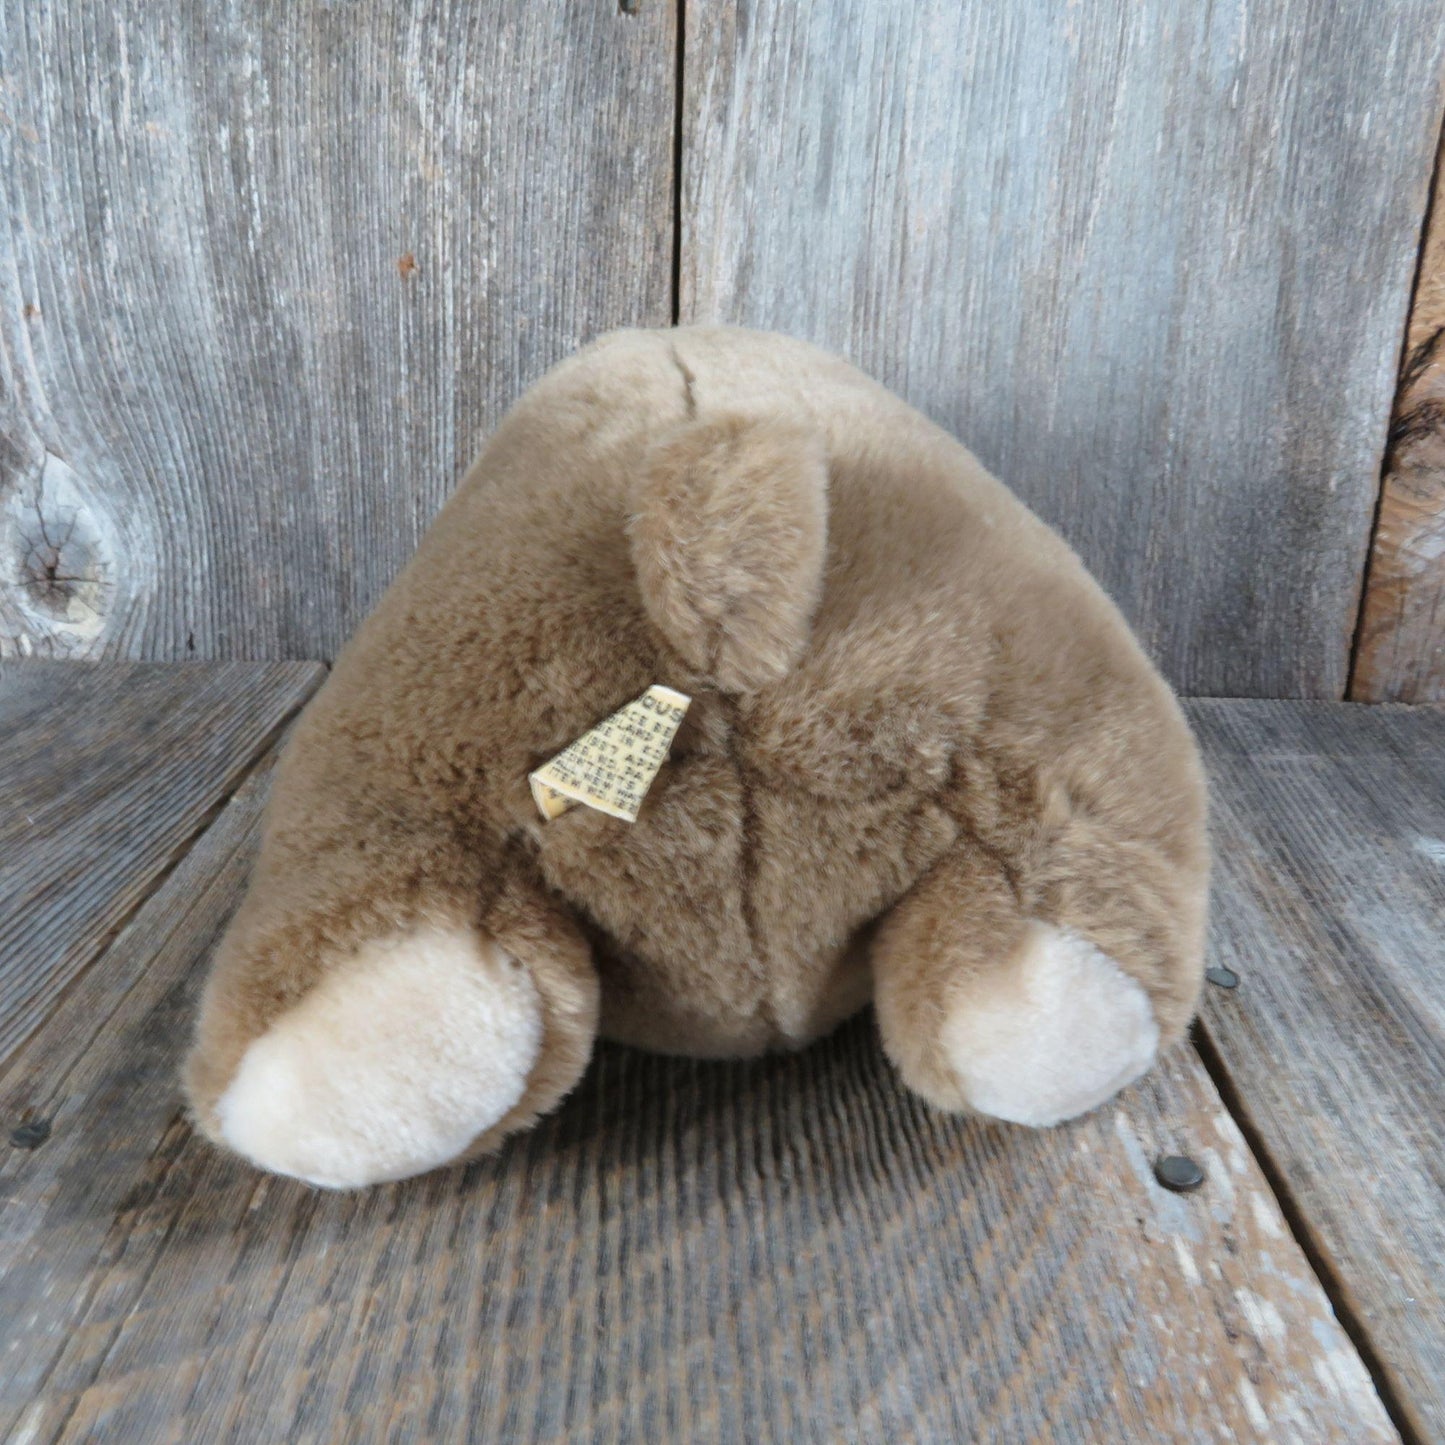 Vintage Teddy Bear Potbelly Plush Sweet Pea Crying Waving Boo Hoo Stuffed Animal 1987